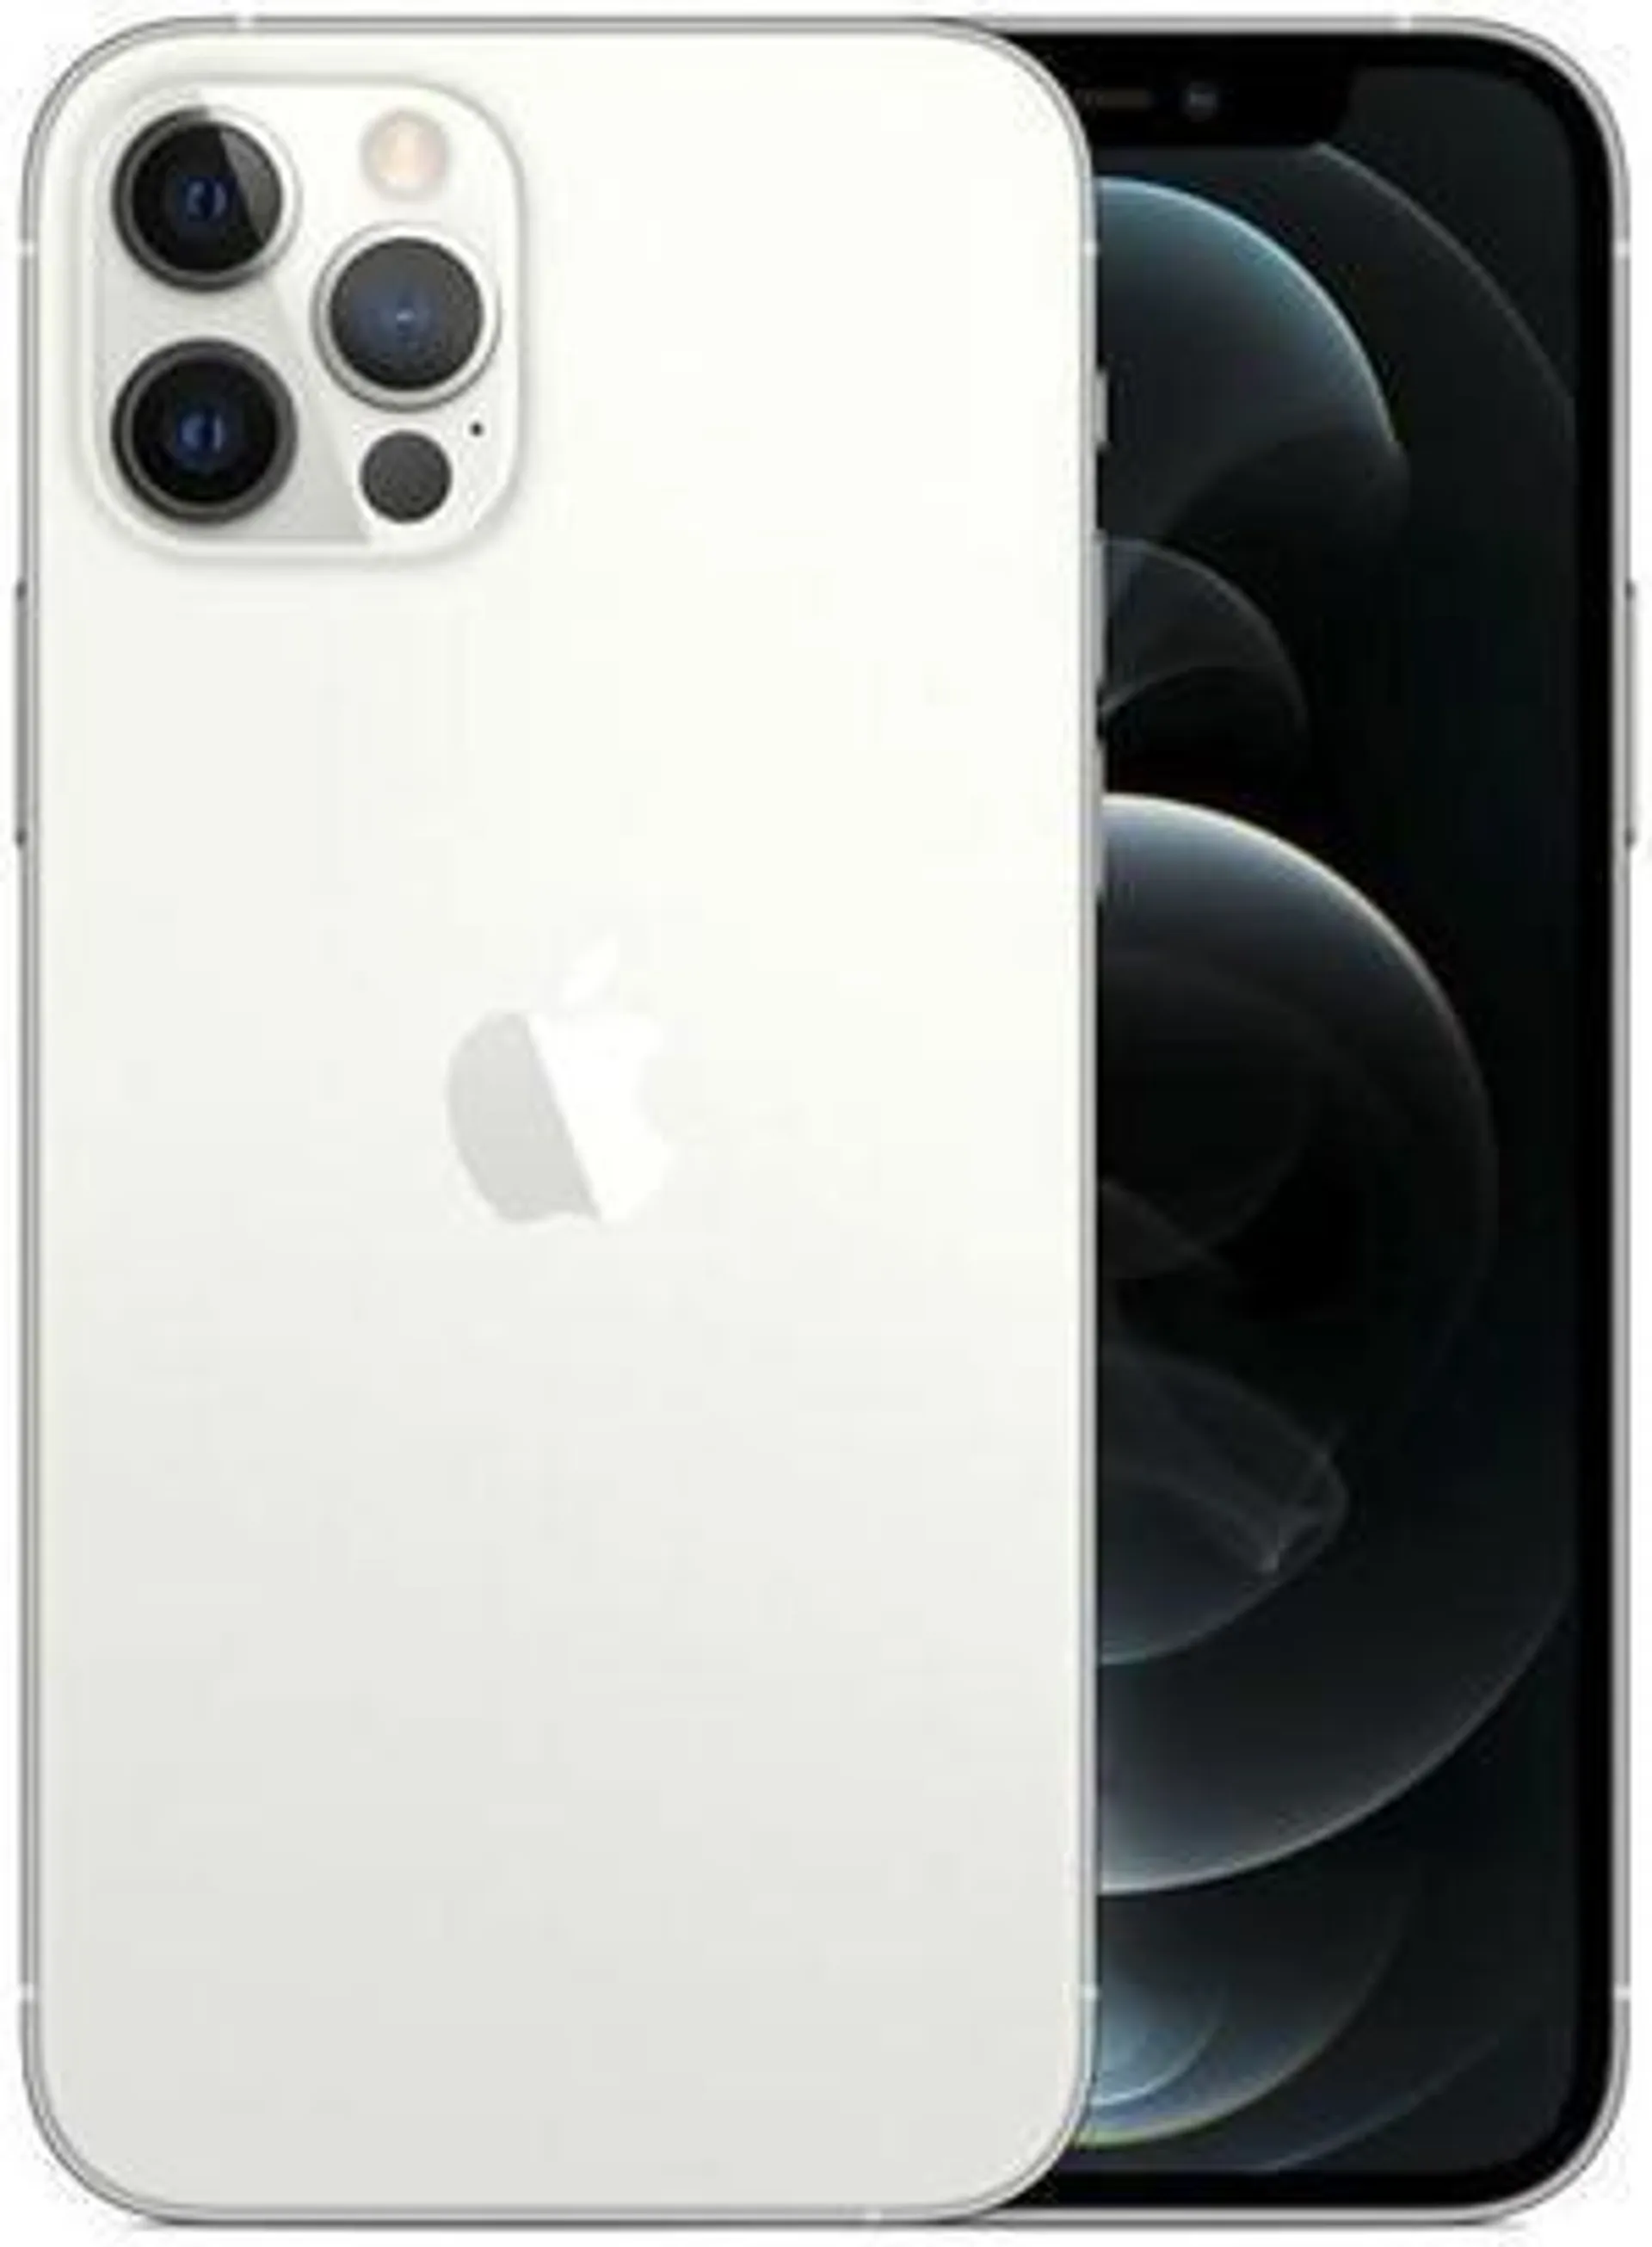 Apple iPhone 12 Pro 256GB Silver - MGLU3LL/A - Grade A